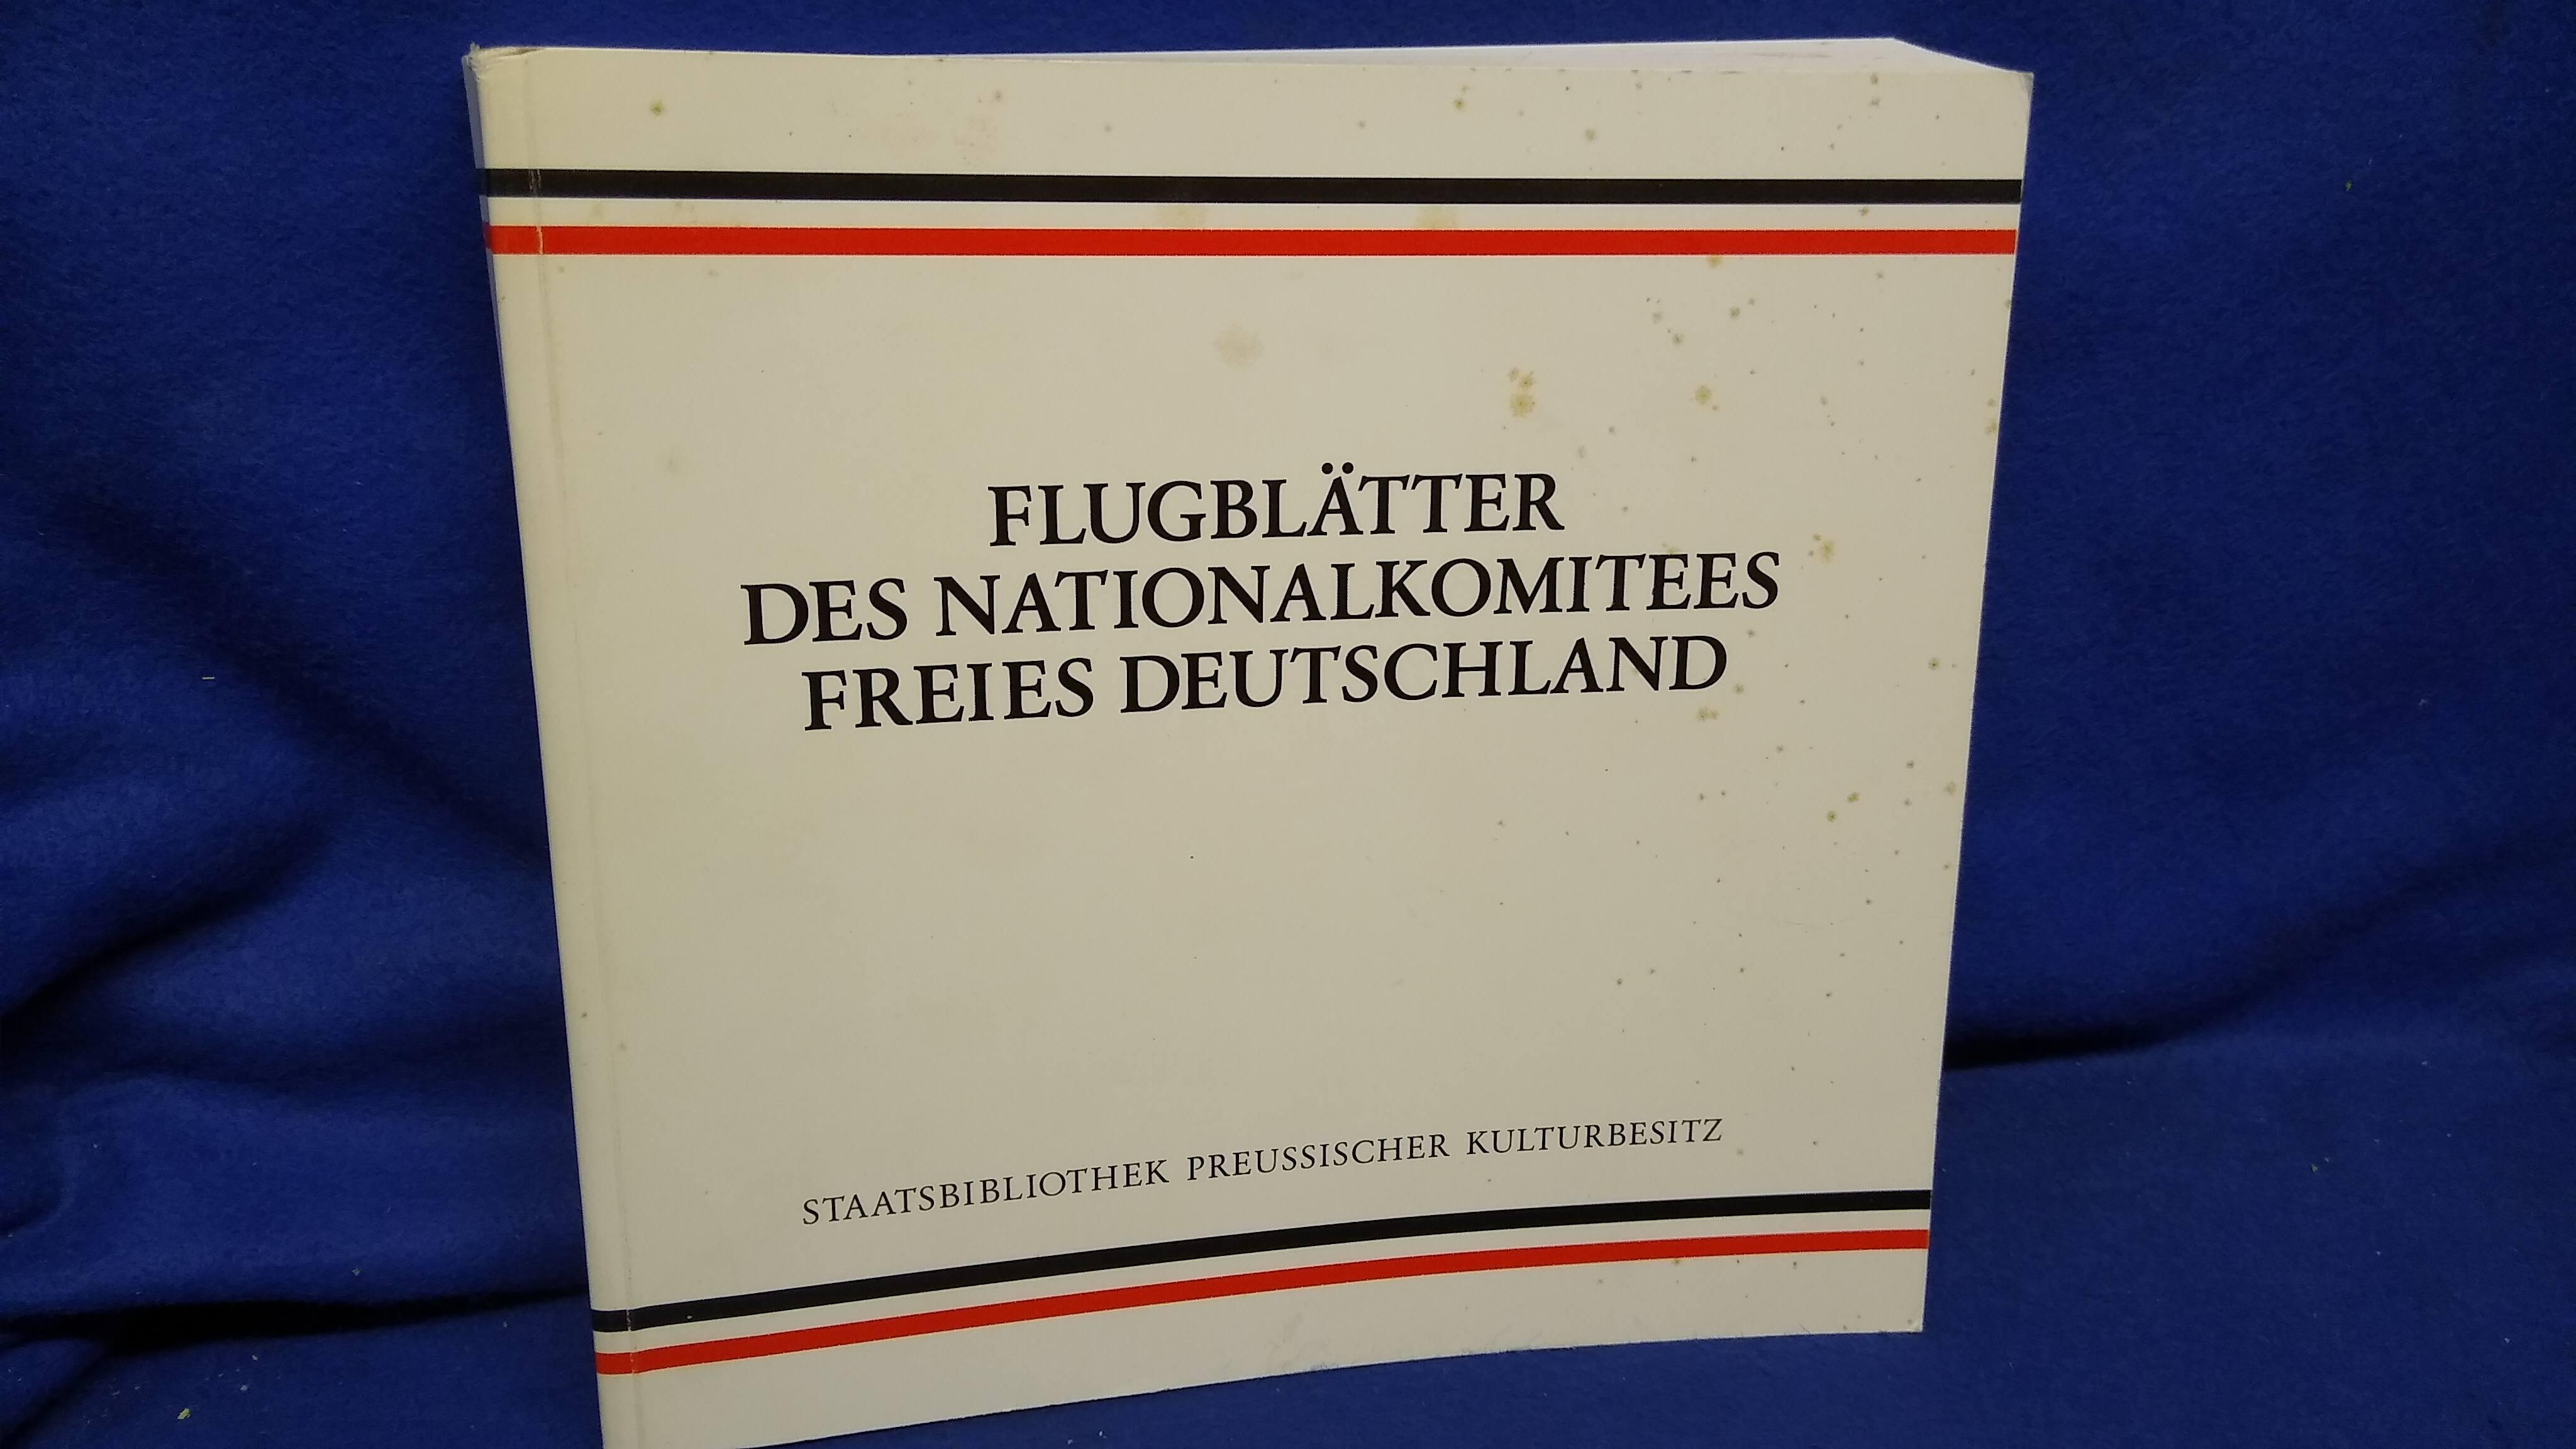 Über 100 Flugblätter des Nationalkomitees Freies Deutschland : Ausstellung, 29. September - 2. November 1989, Staatsbibliothek Preussischer Kulturbesitz Berlin